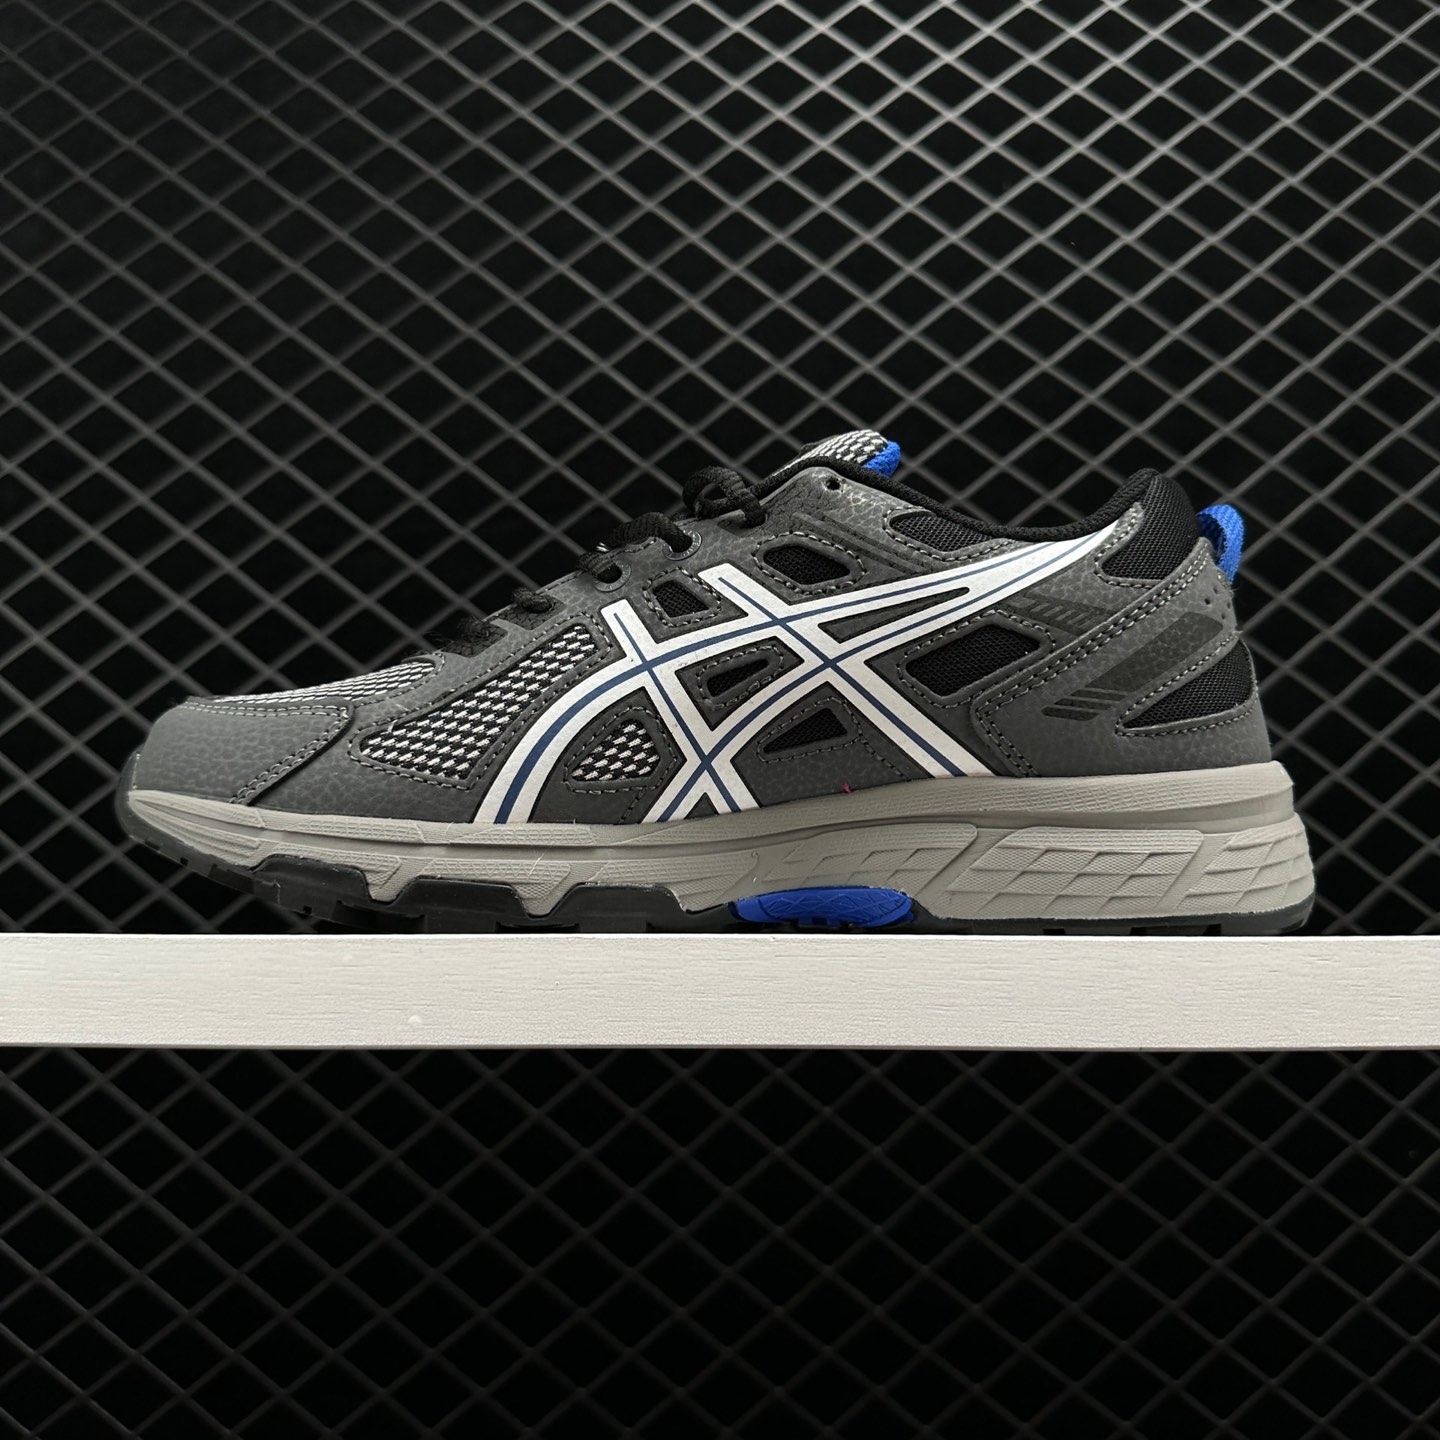 Asics Gel Venture 6 Metropolis Glacier Grey: Superior Trail Running Shoes